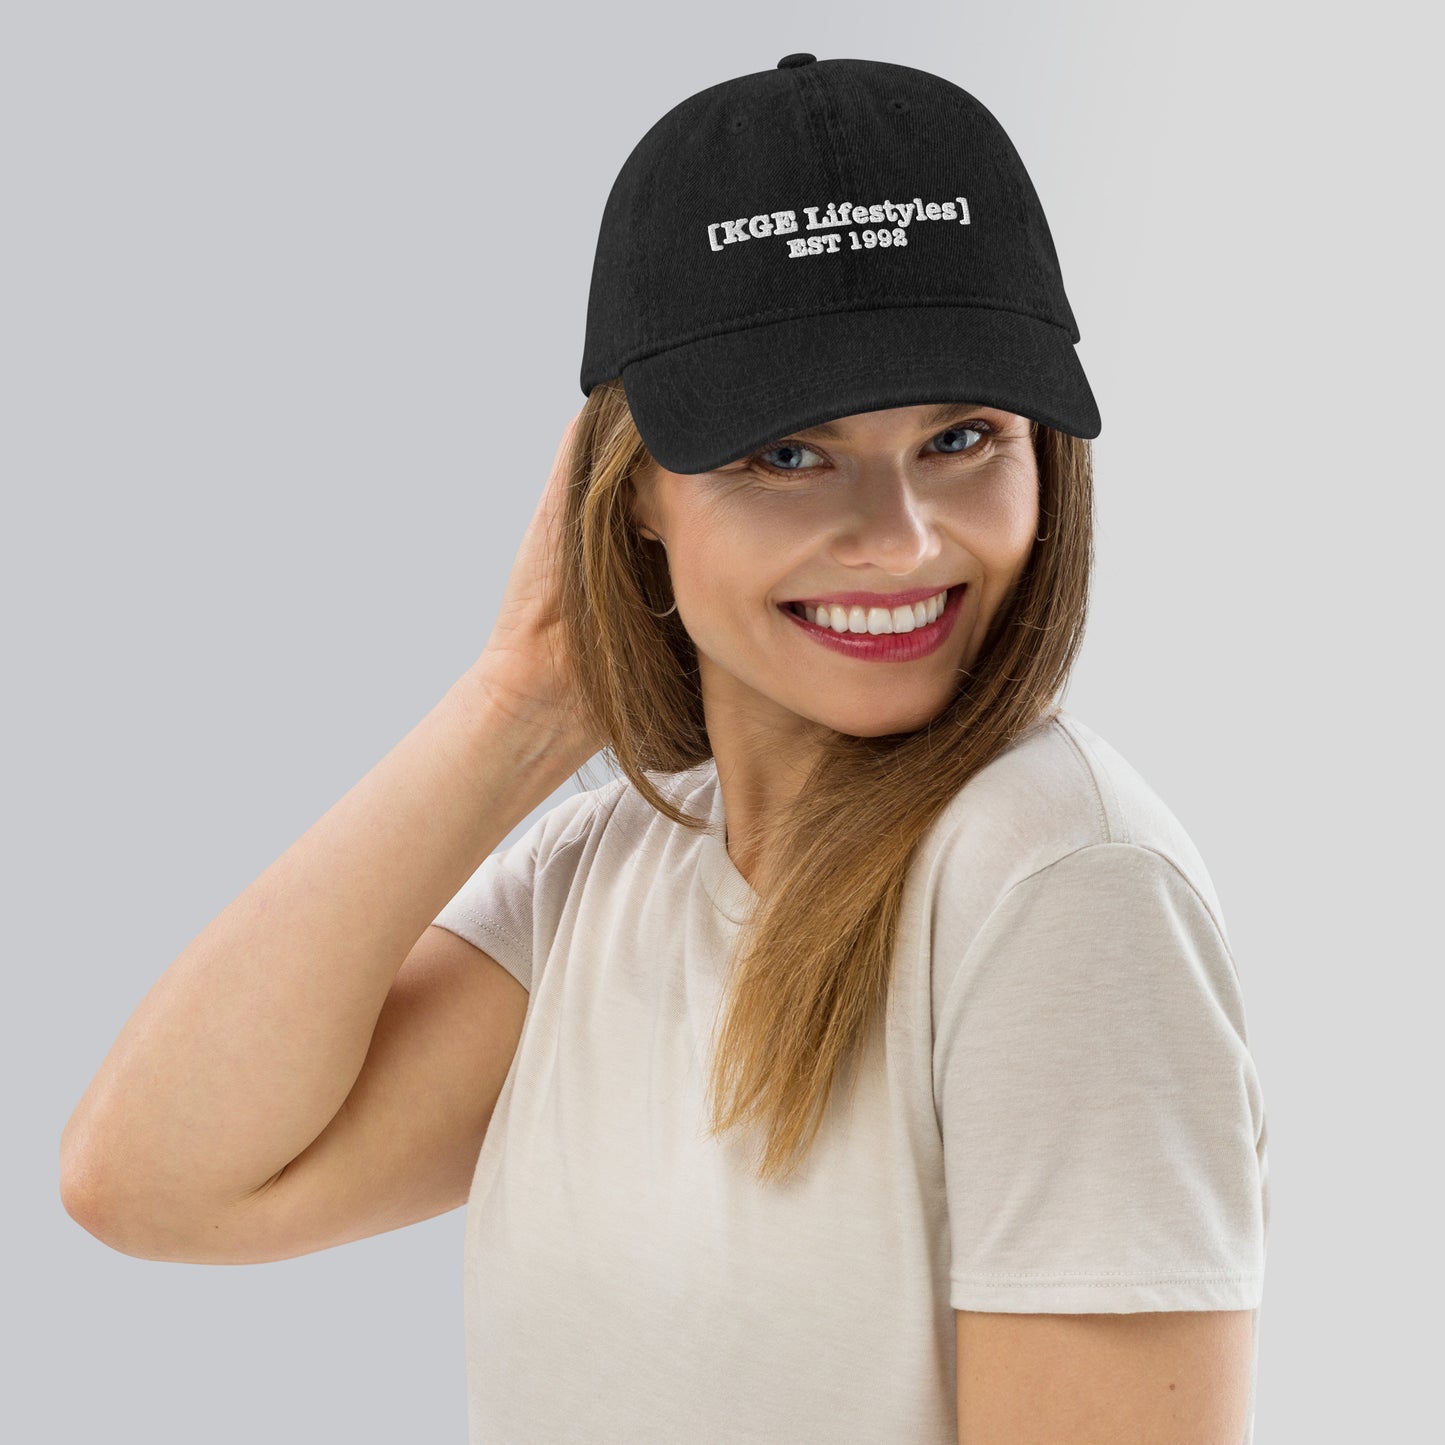 KGE Lifestyles Denim Hat (Low Profile/Dad Hat)